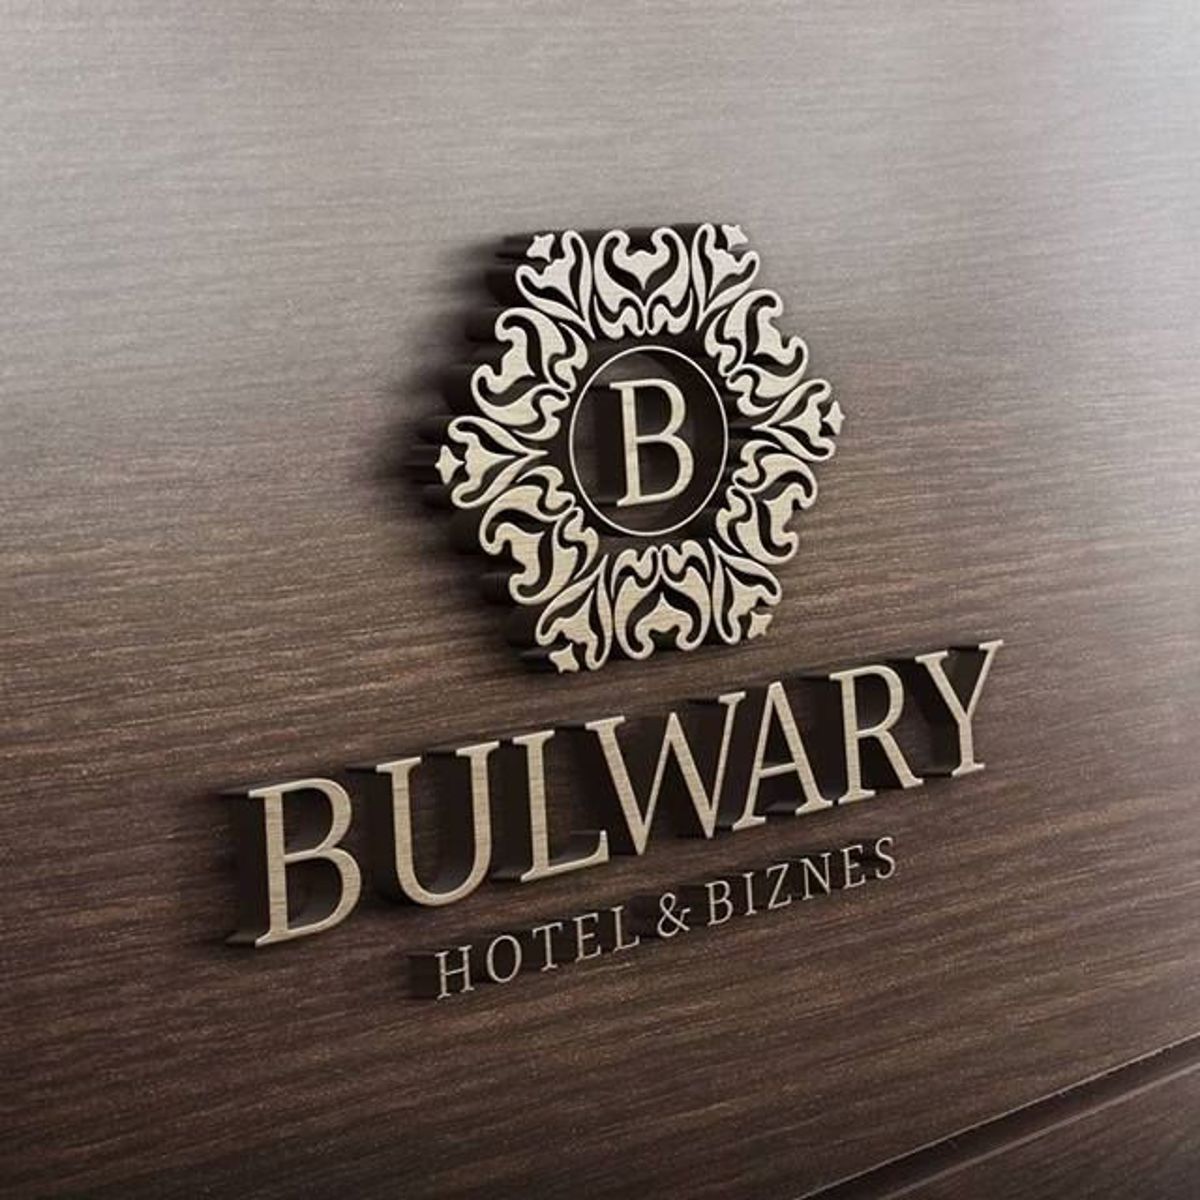 Bulwary Hotel & Biznes